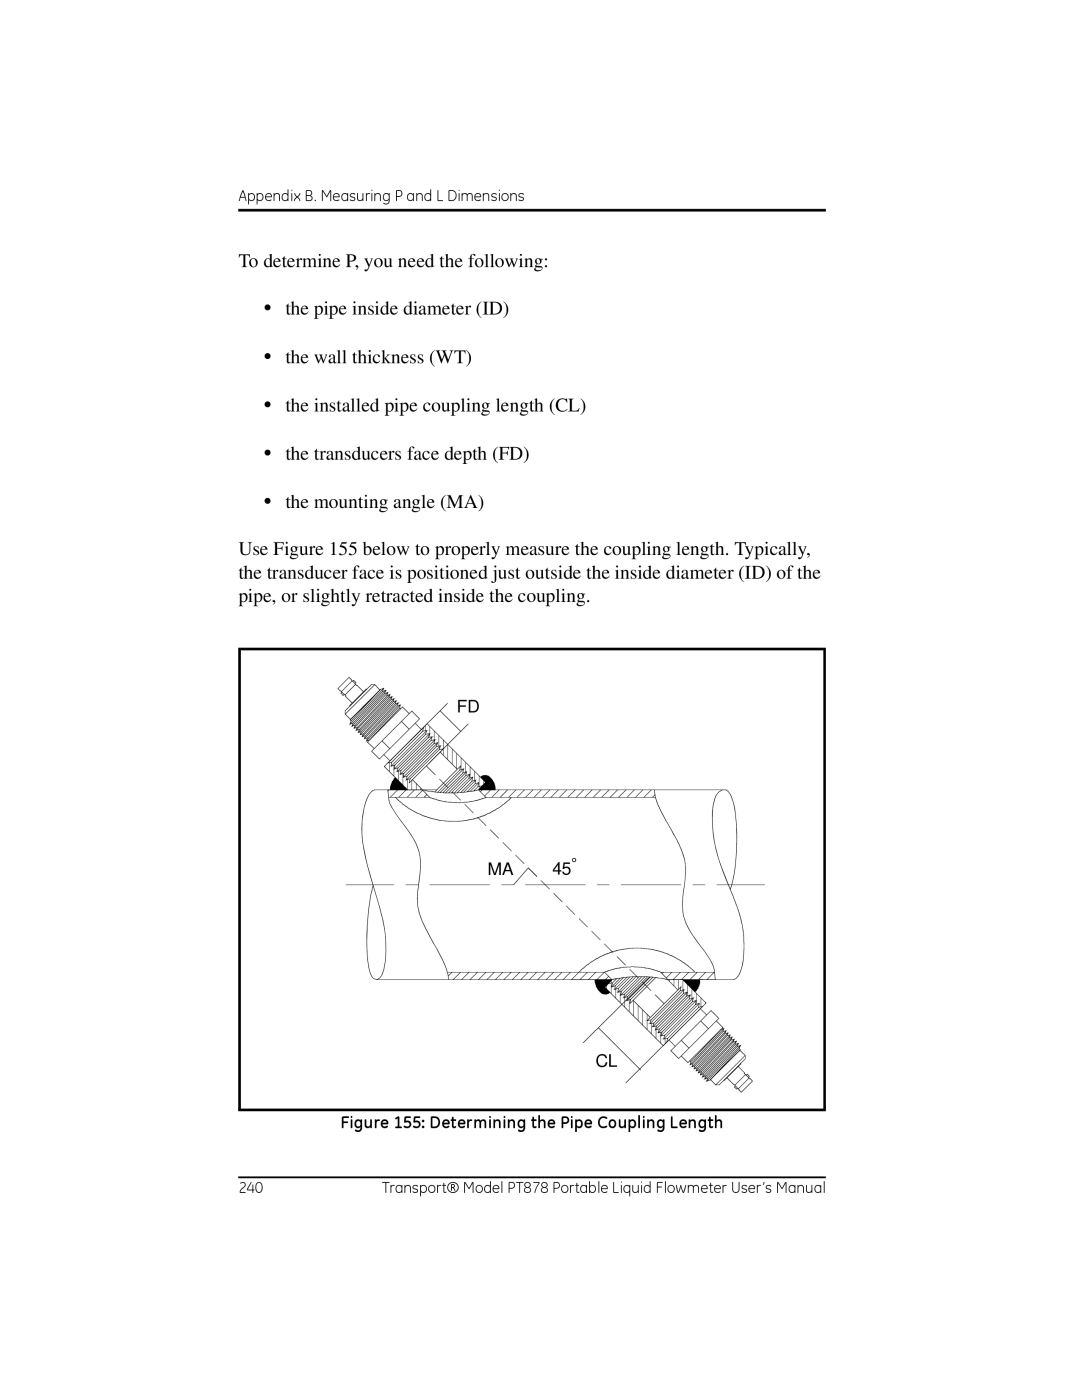 GE PT878 user manual Determining the Pipe Coupling Length 